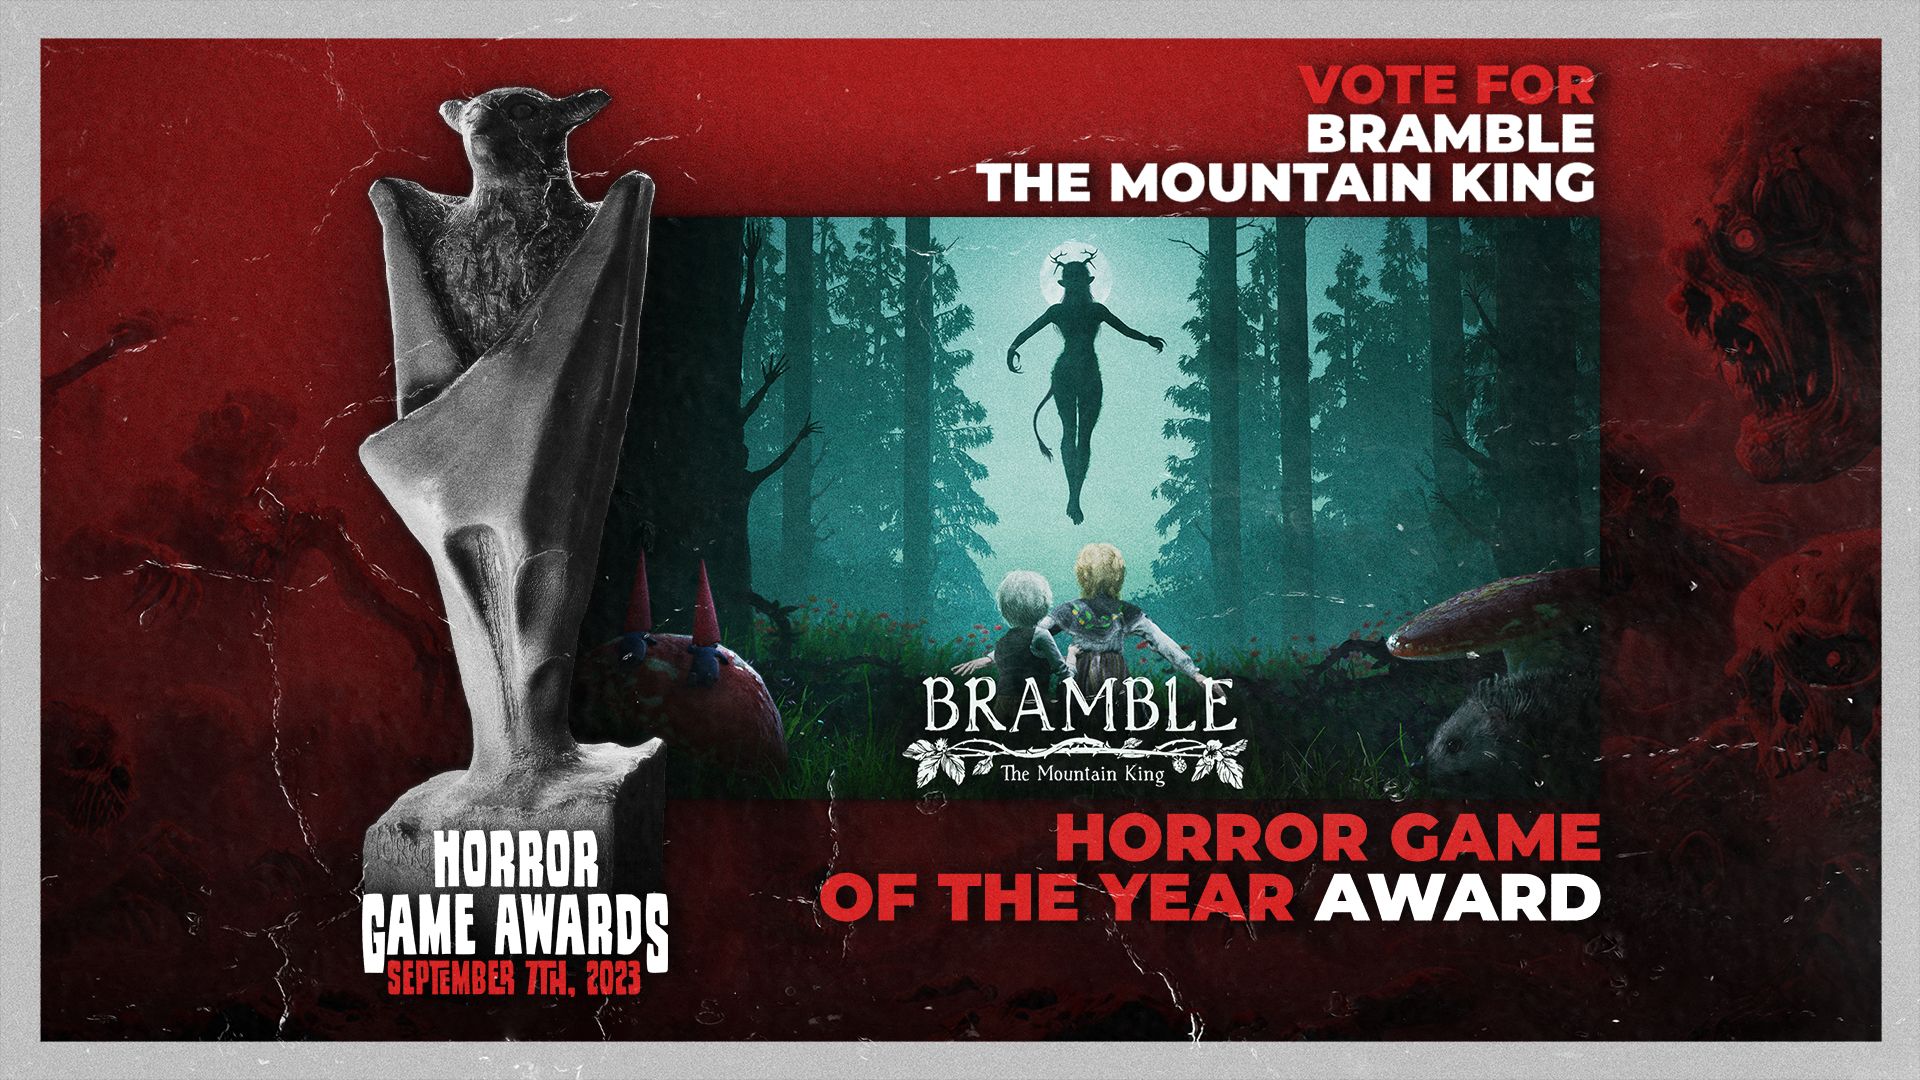 Vote for Bramble in Feardemic's Horror Game Awards!